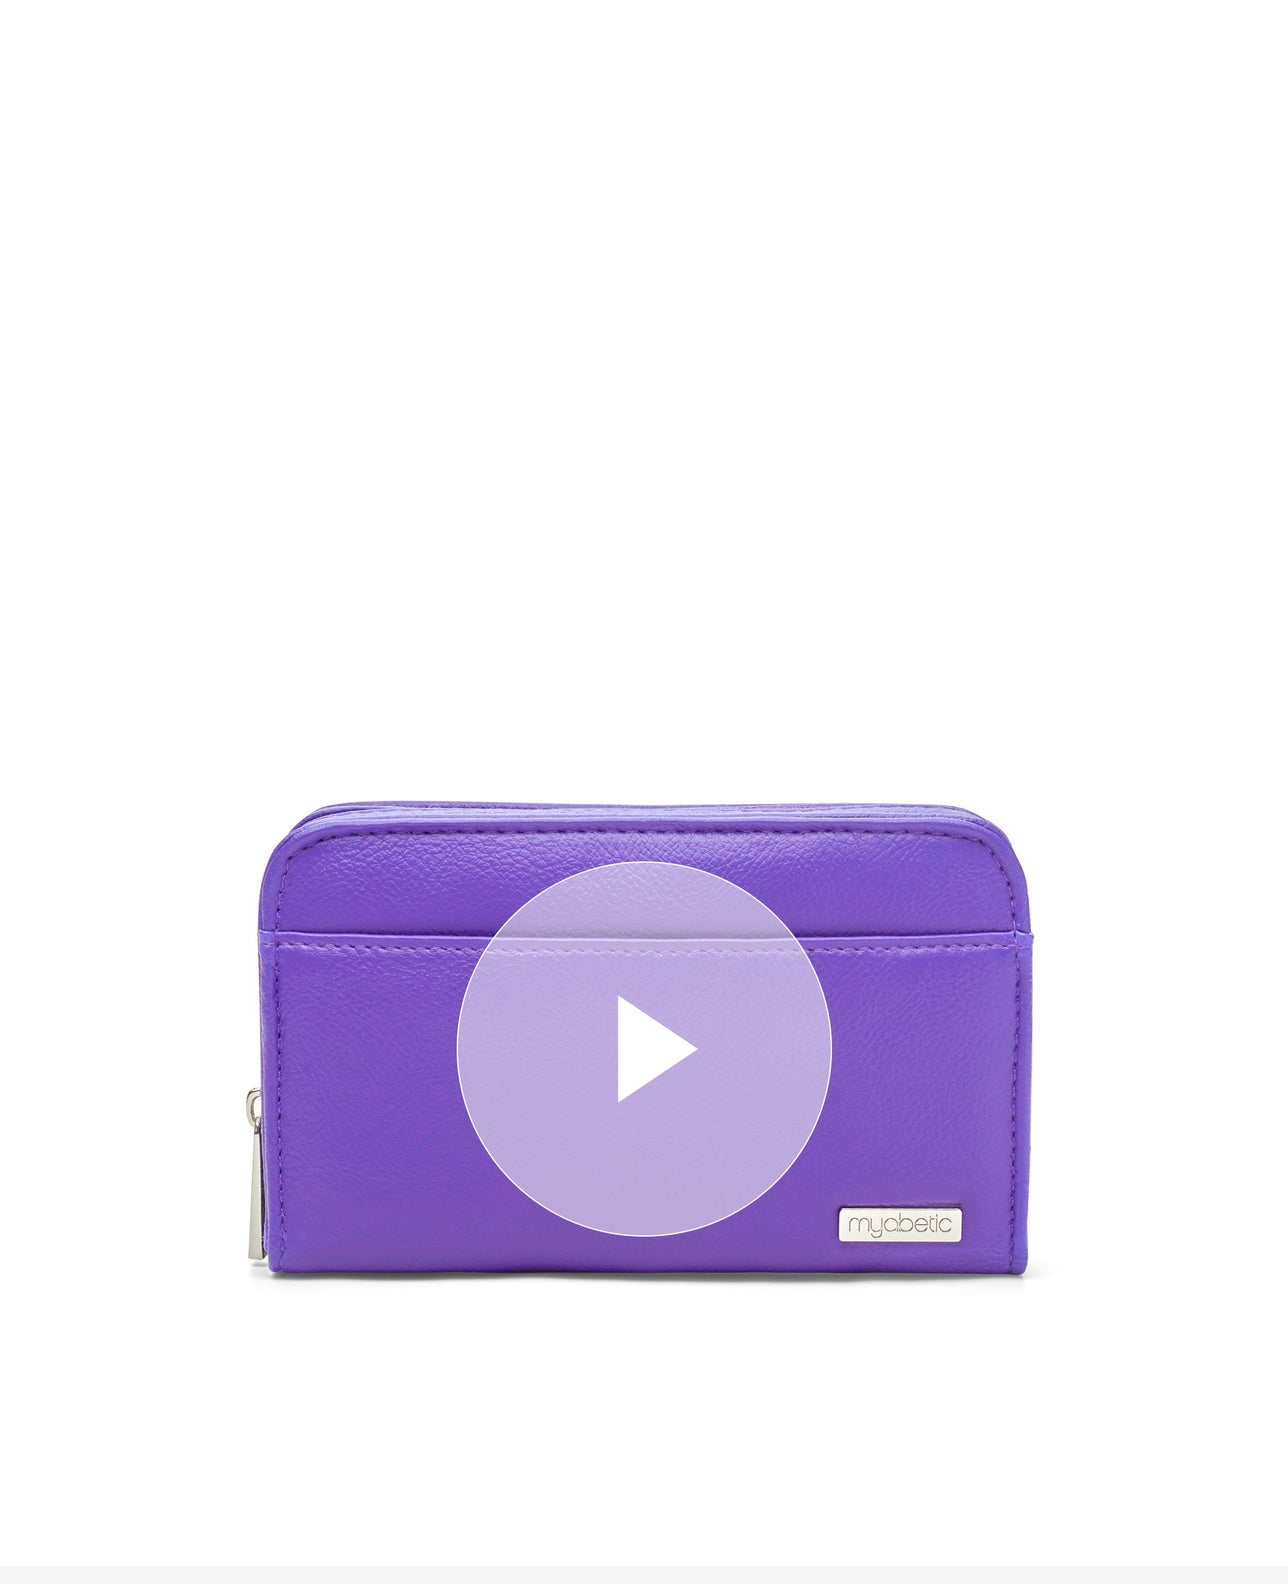 Color:Purple  https://player.vimeo.com/video/523970398